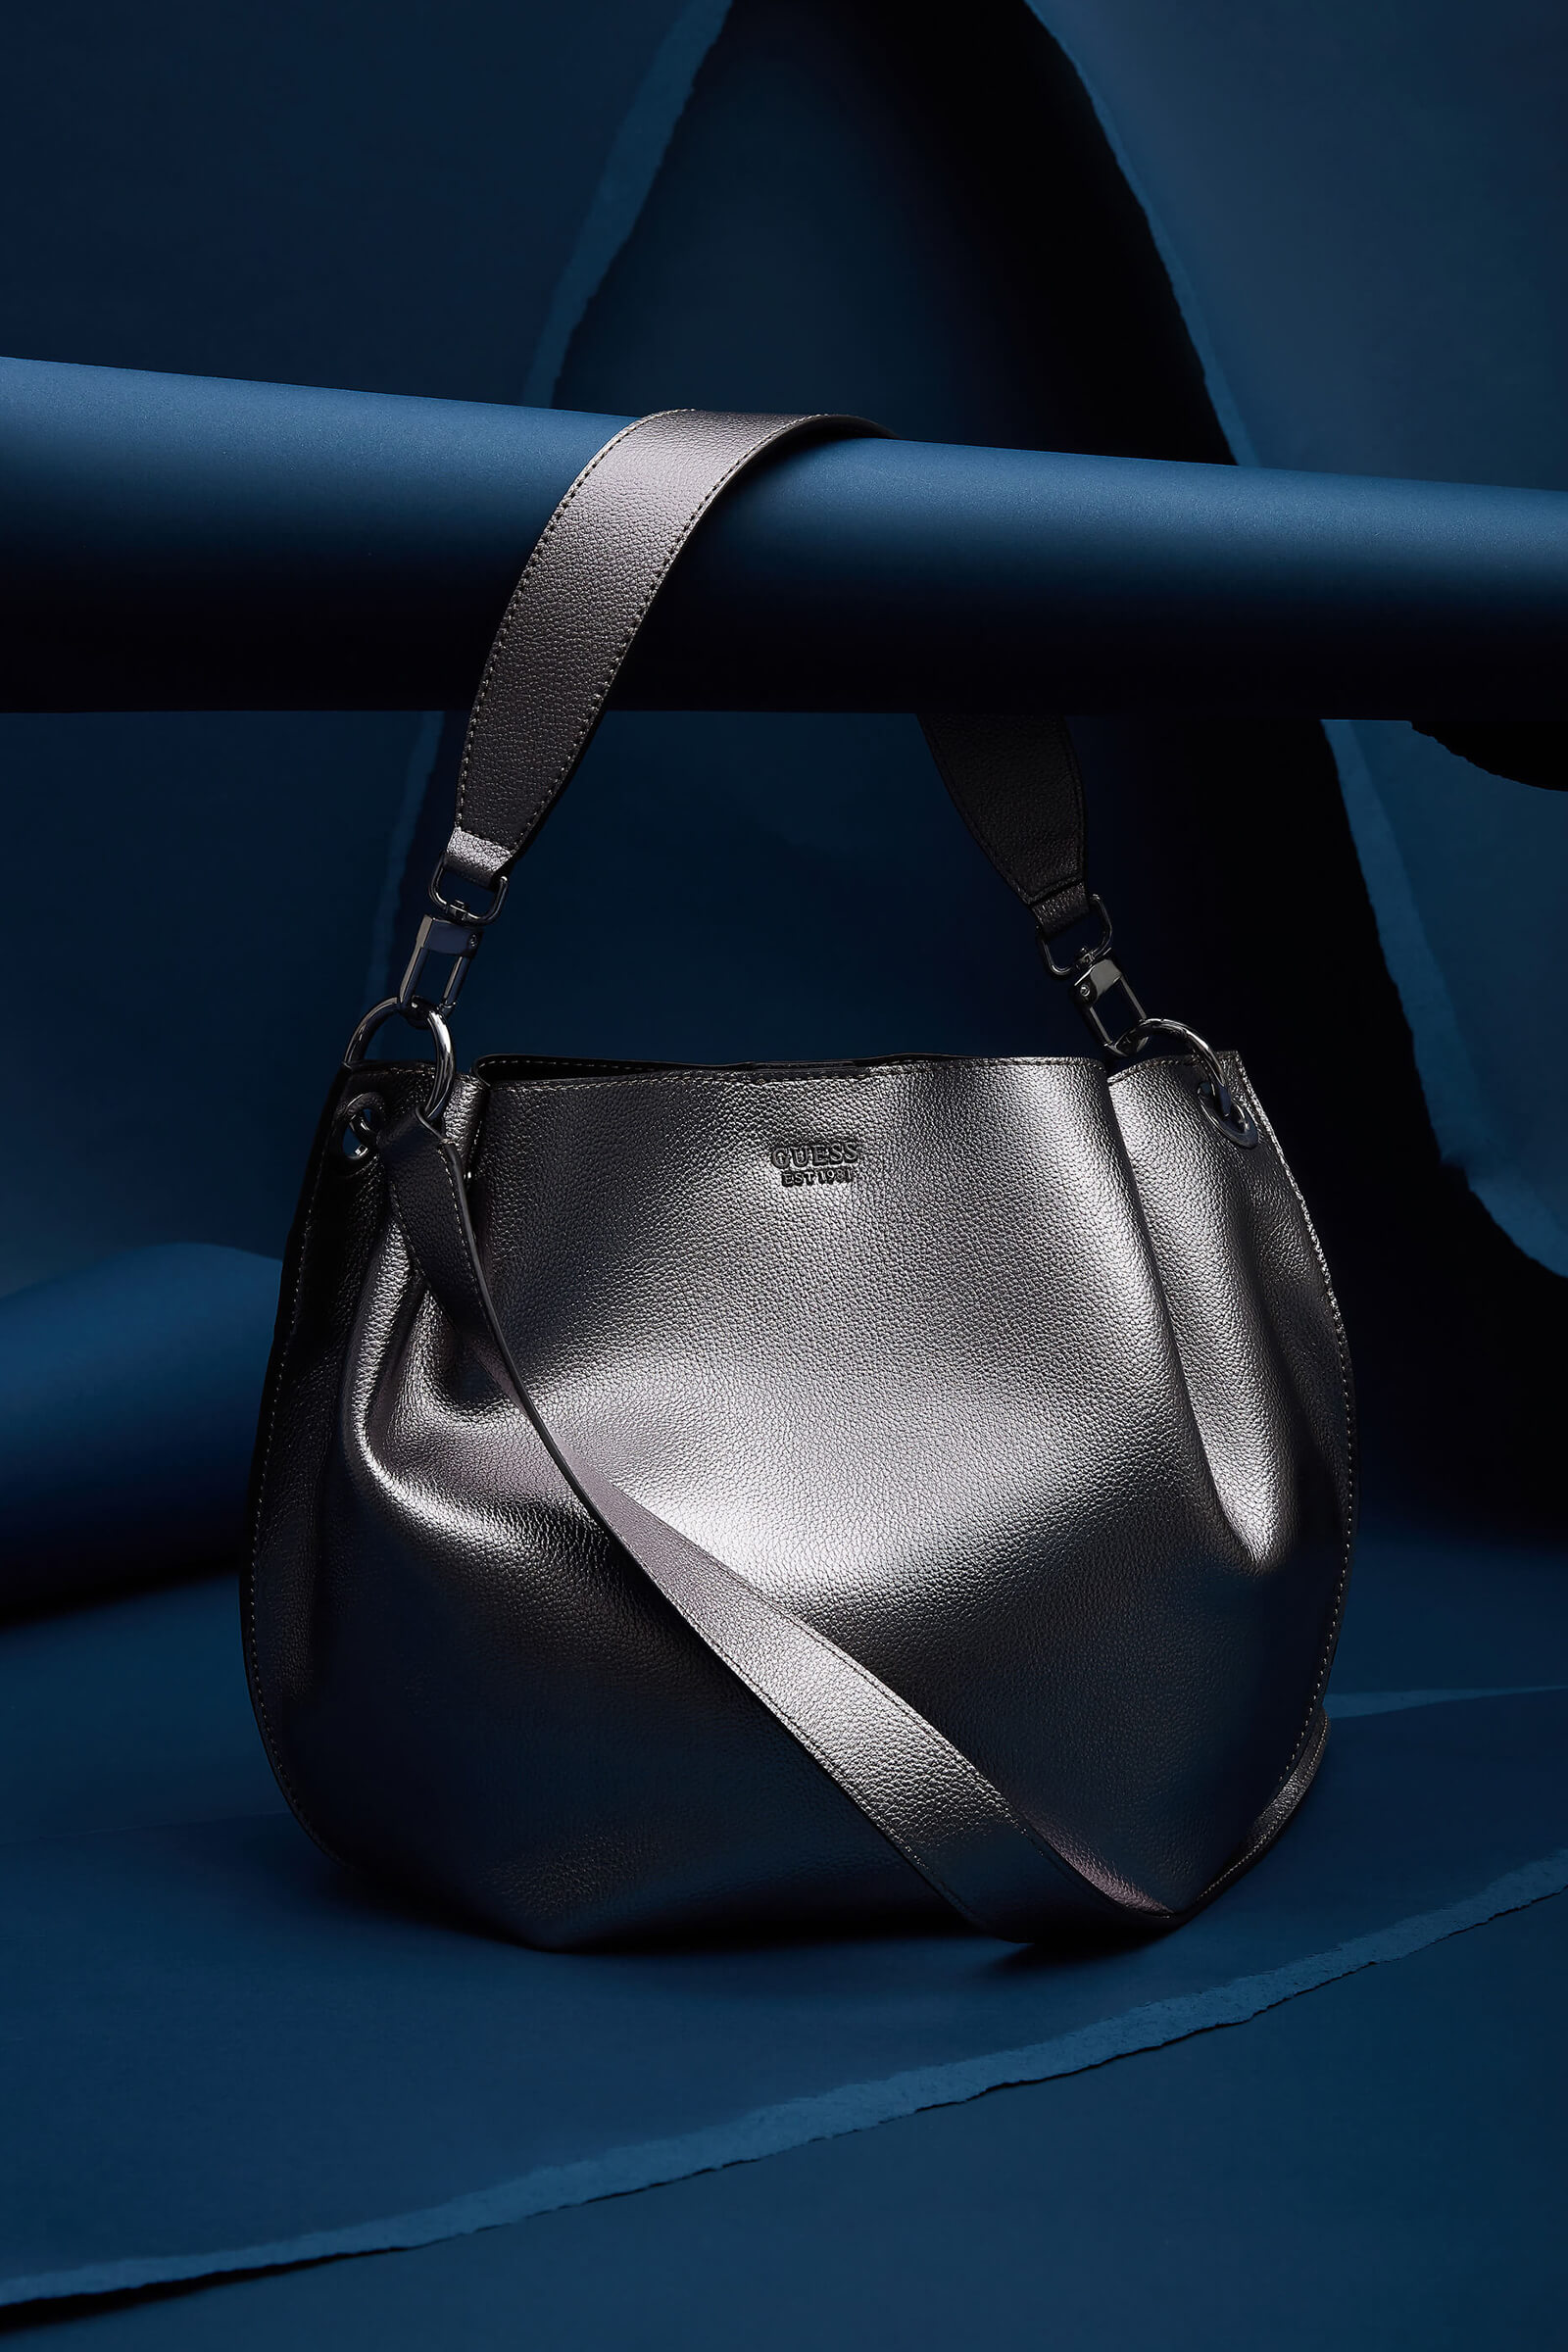 Ib Brace en kreditor Guess Handbags Image Editing Campaign